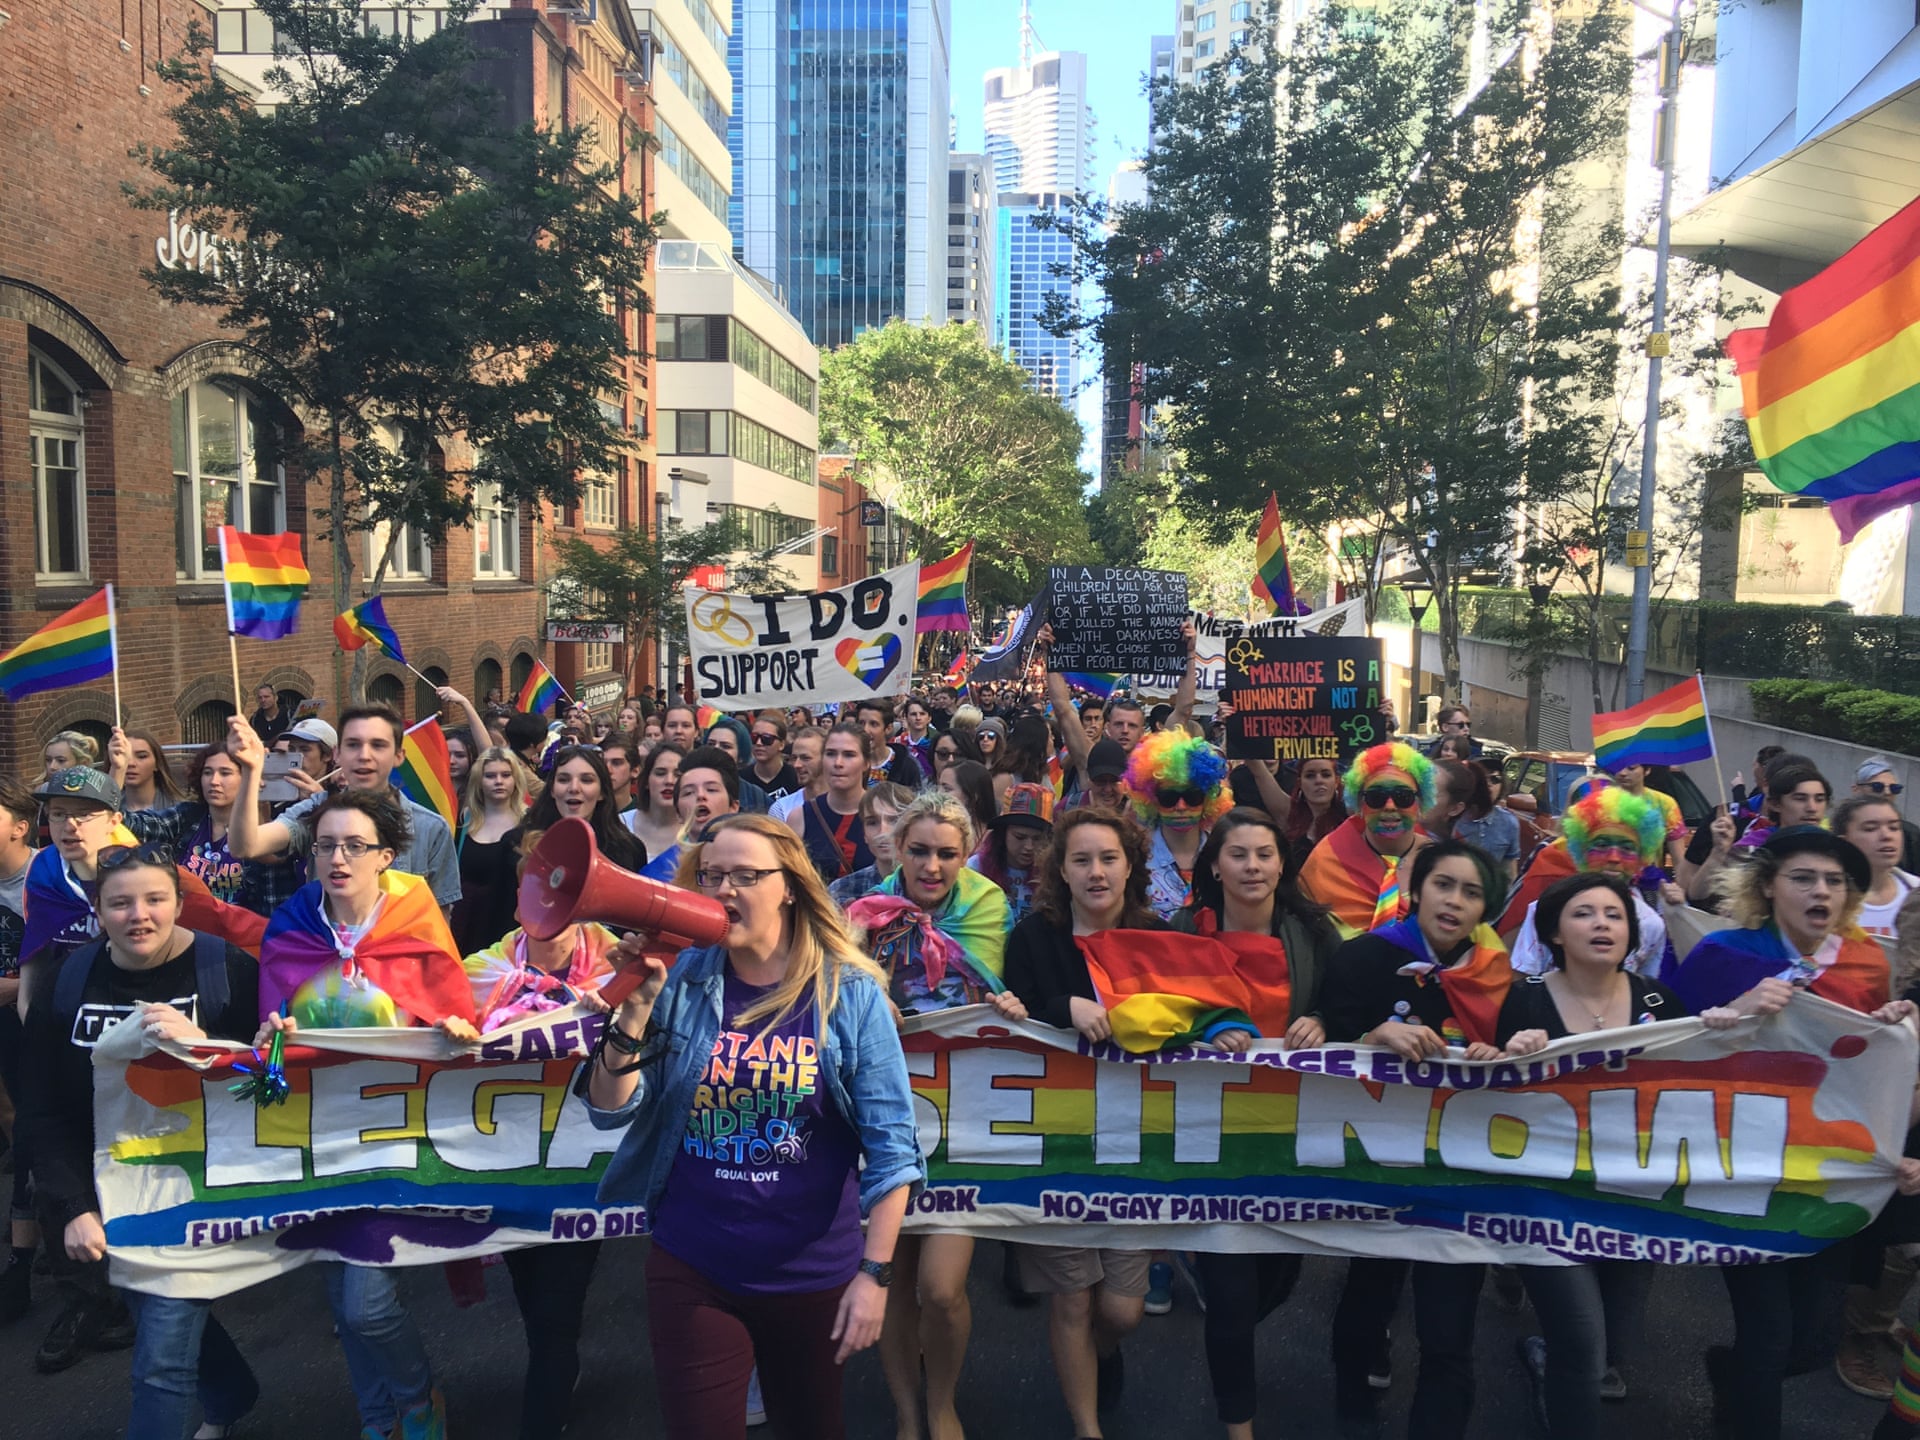 Brisbane same-sex support rally, 2016.